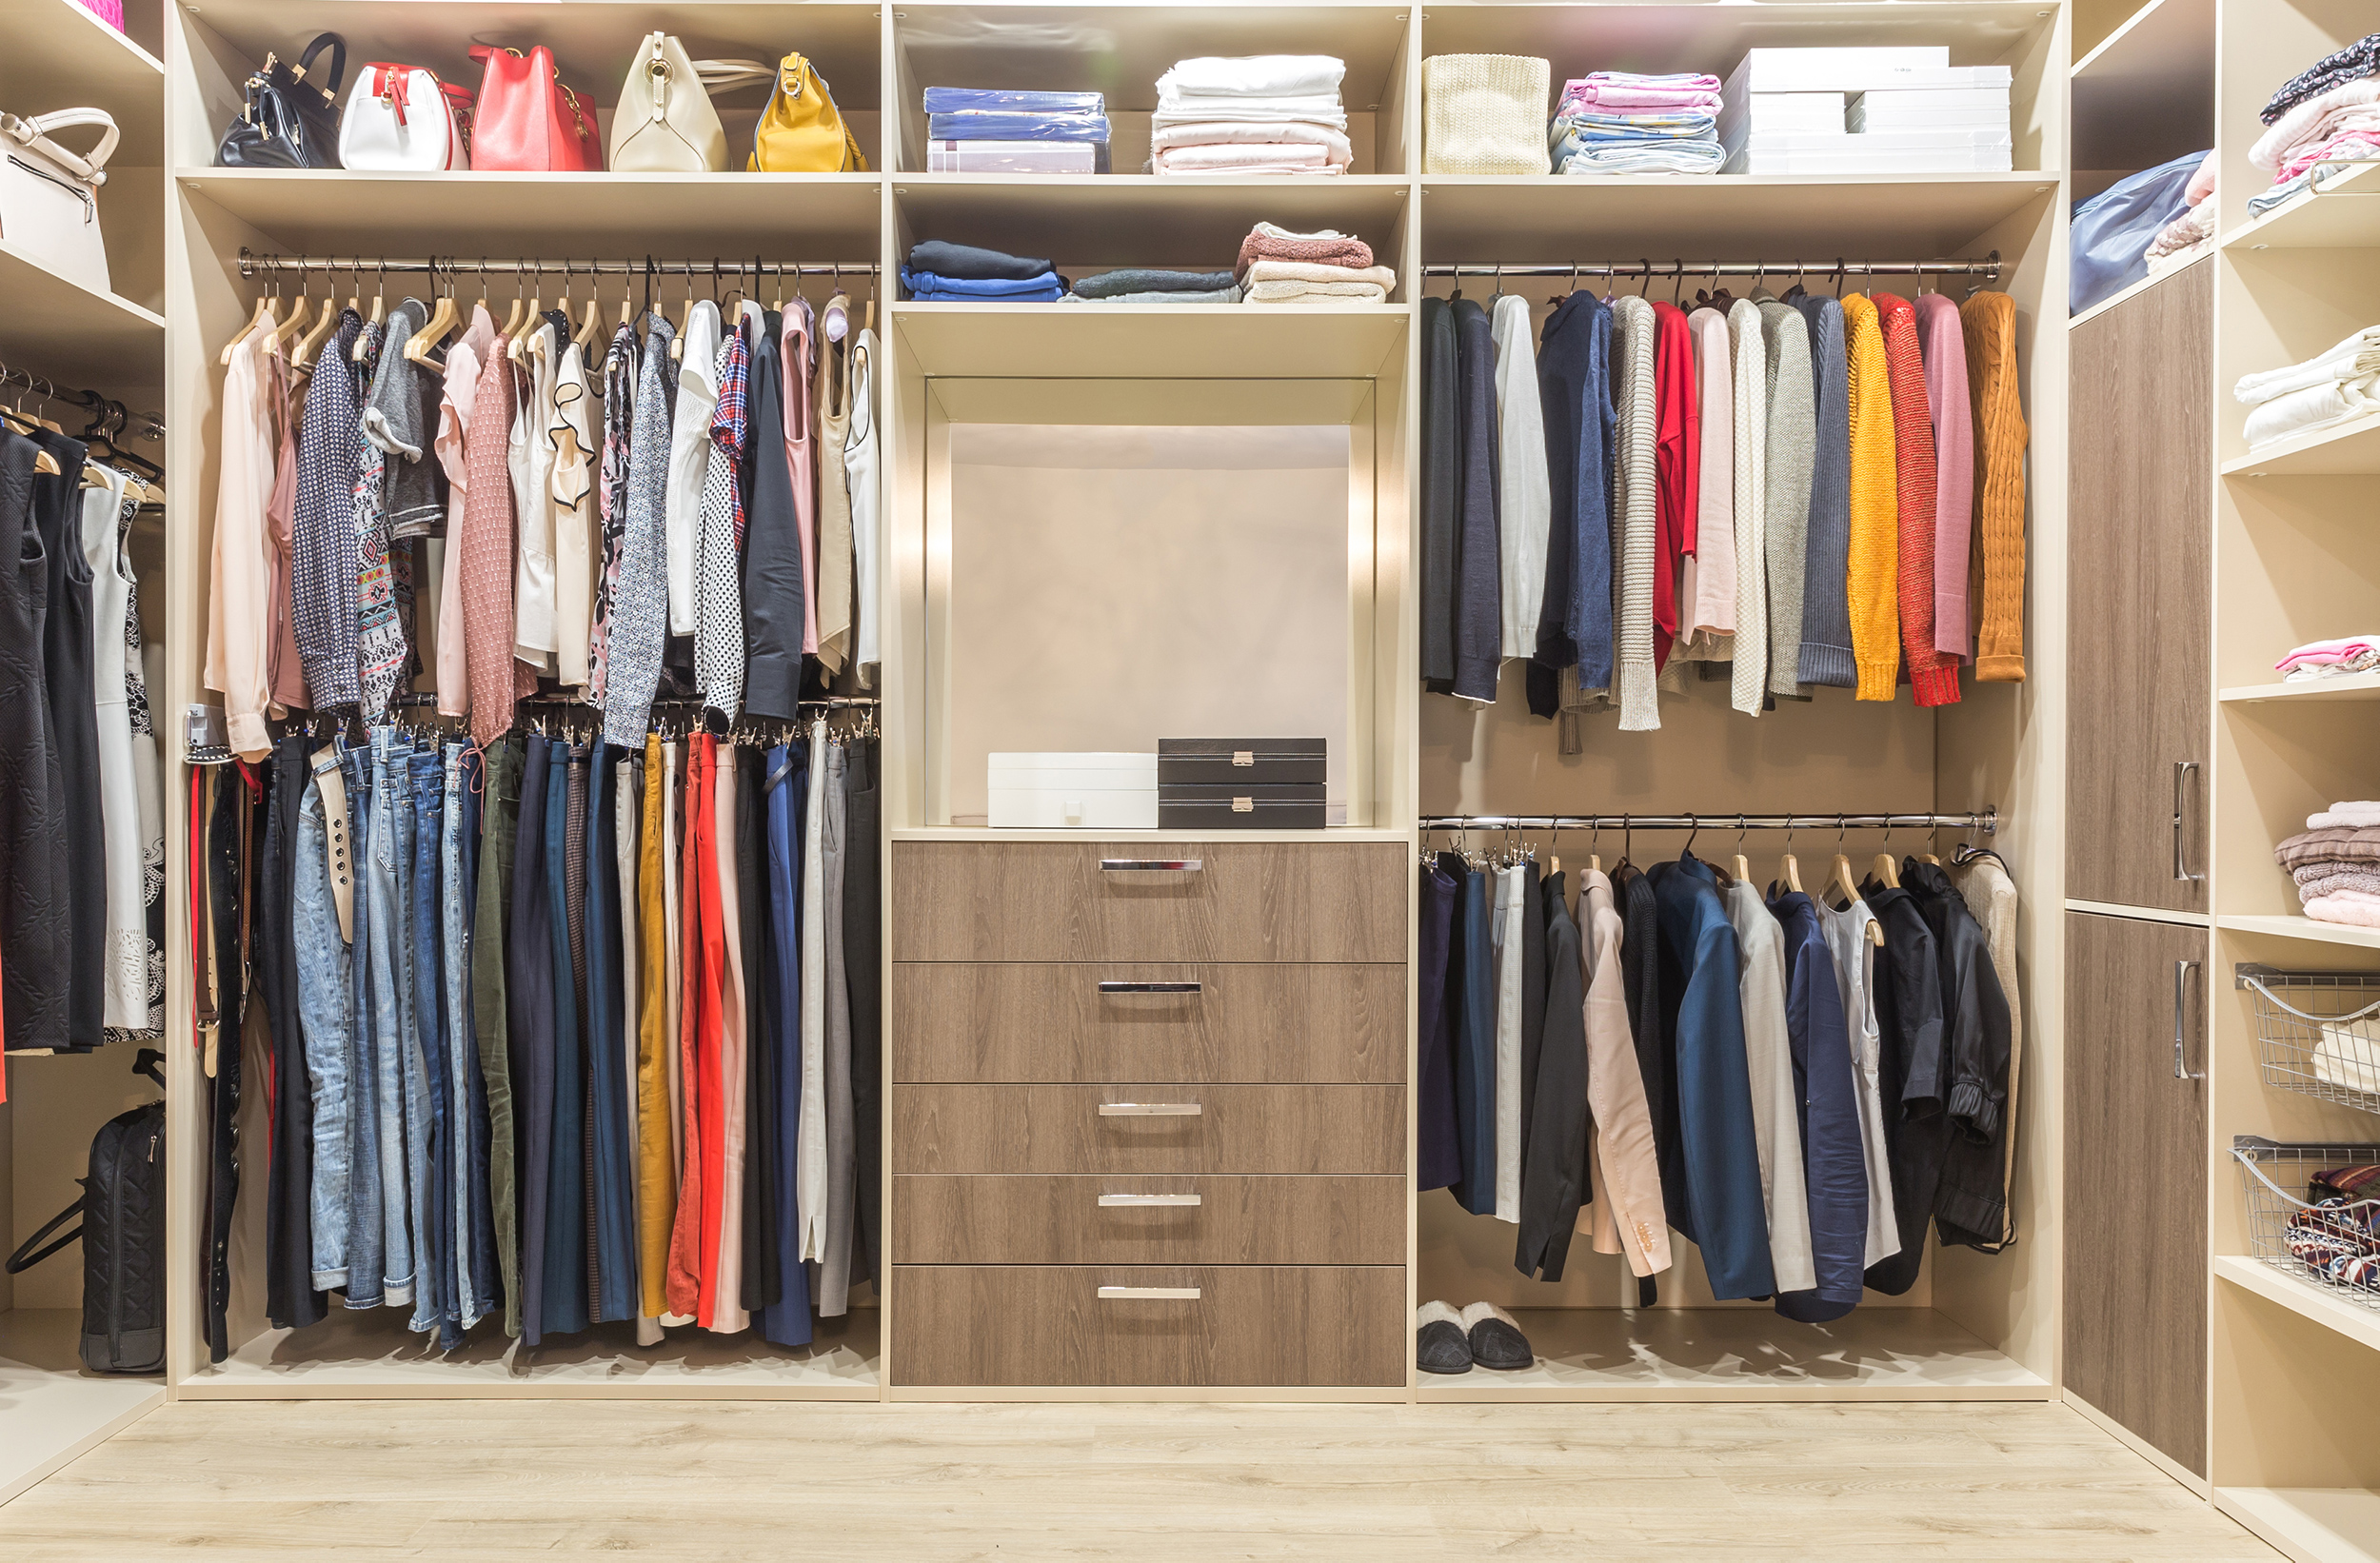 A tidy closet full of organized clothing